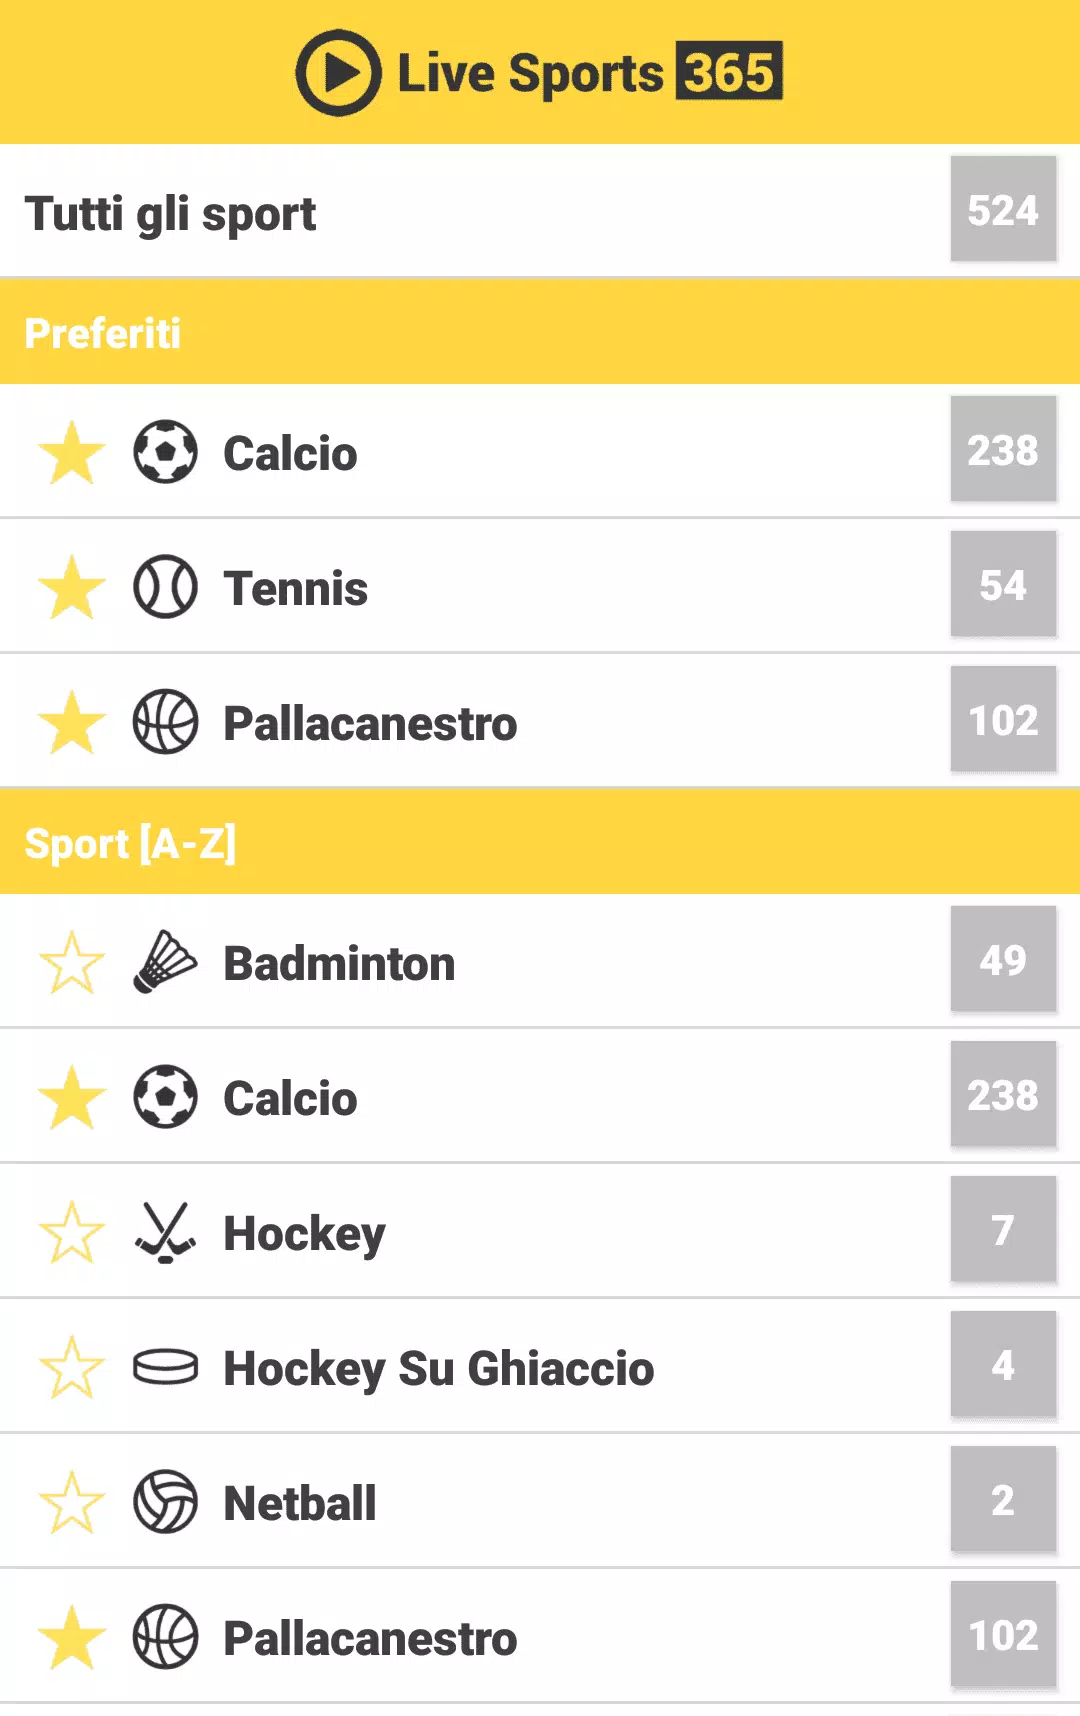 Live Sports 365 - Lo Sport live sempre con te for Android - APK Download